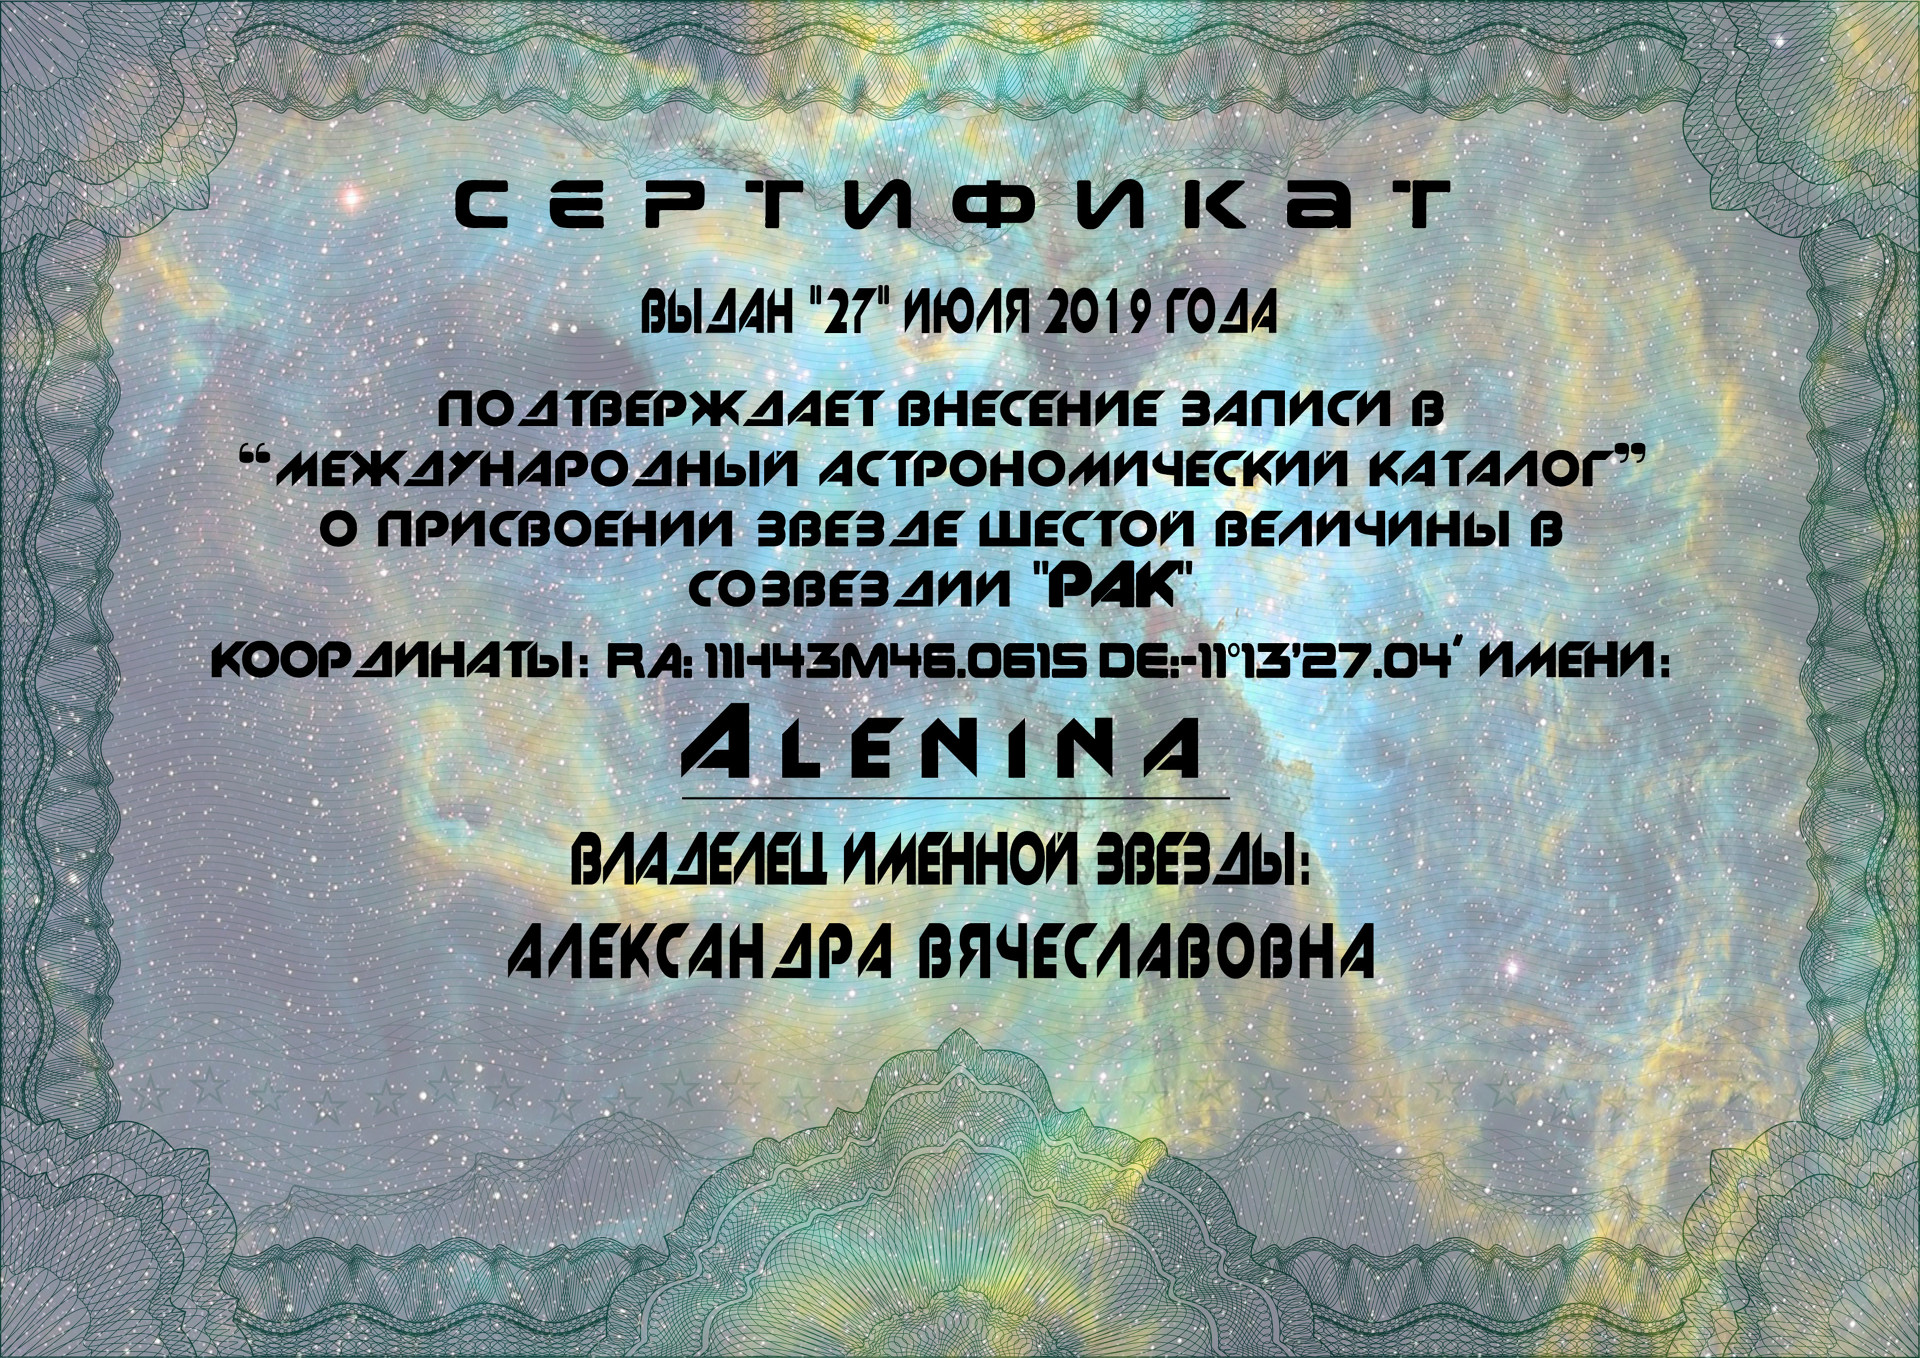 сертификат +на звезду, подарить звезду сертификат, подарить звезду +с неба сертификат, сертификат +на звезду +с неба